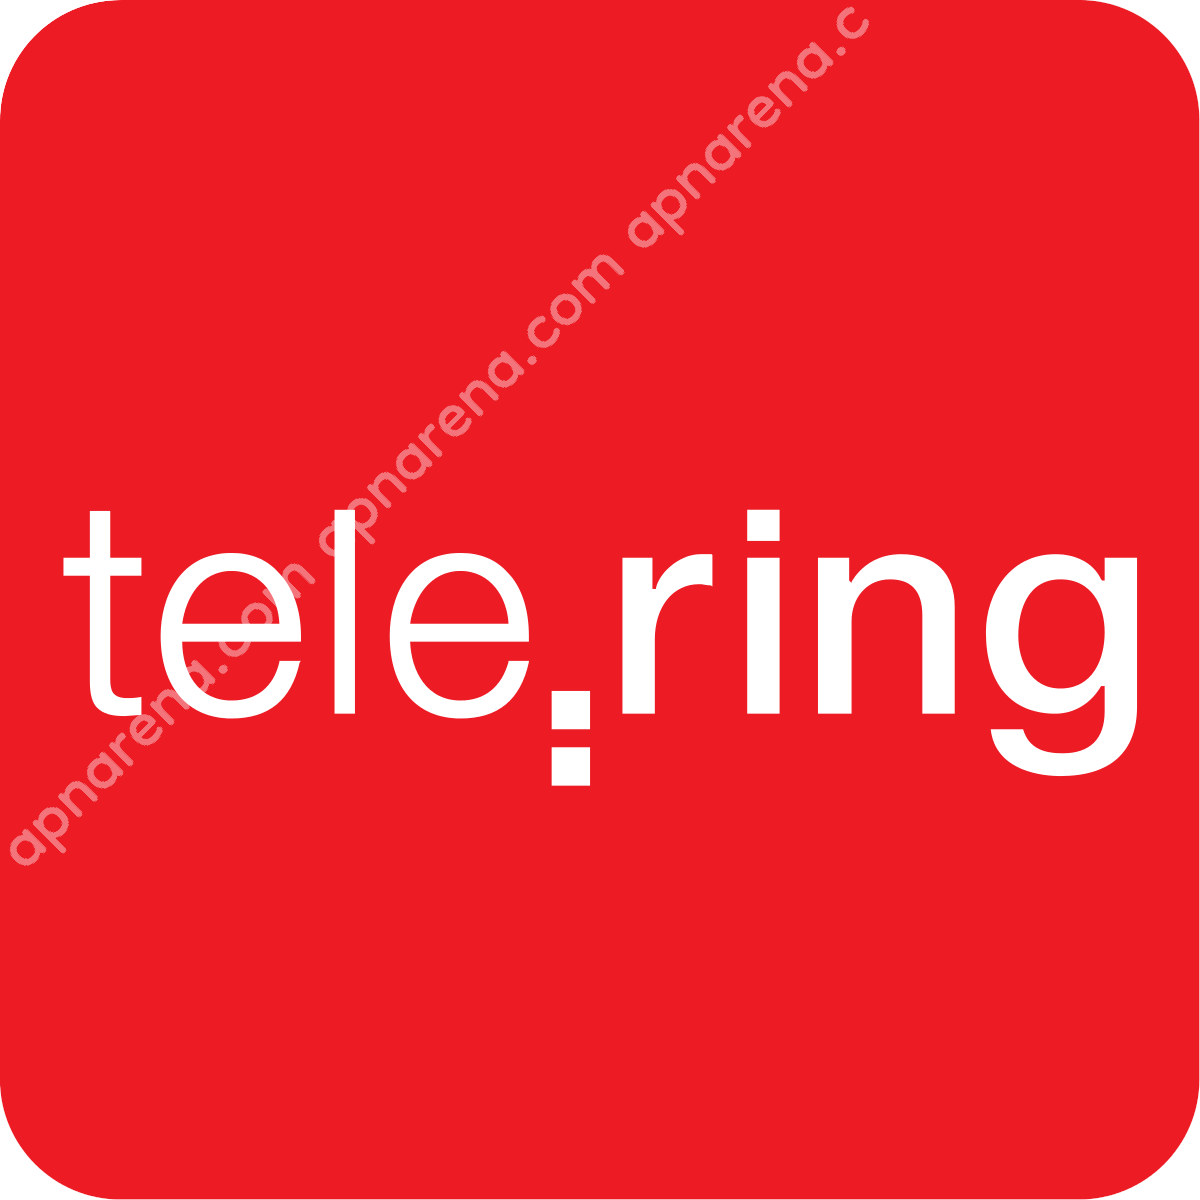 tele.ring APN Internet Settings Android iPhone